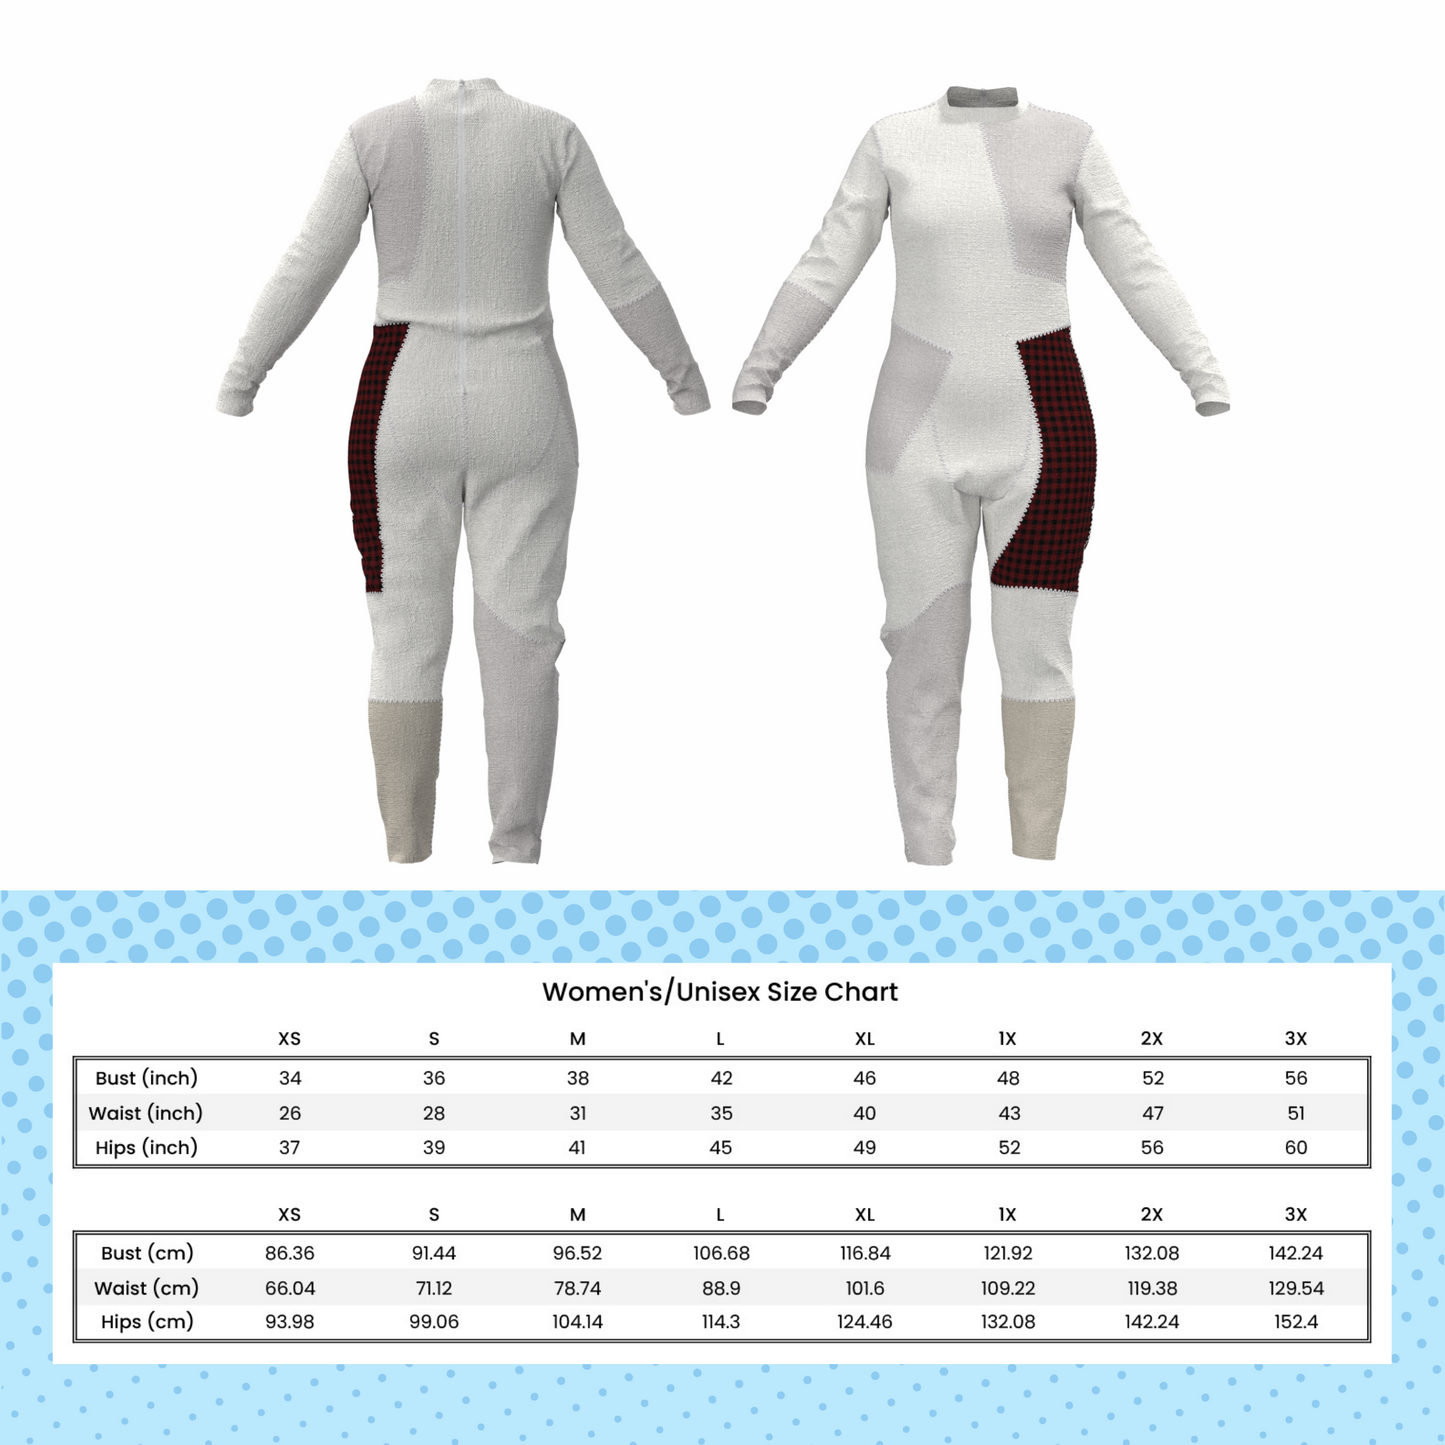 Vanny Bodysuit PDF Cosplay Pattern | FNAF Security Breach Inspired Printable Costume Pattern